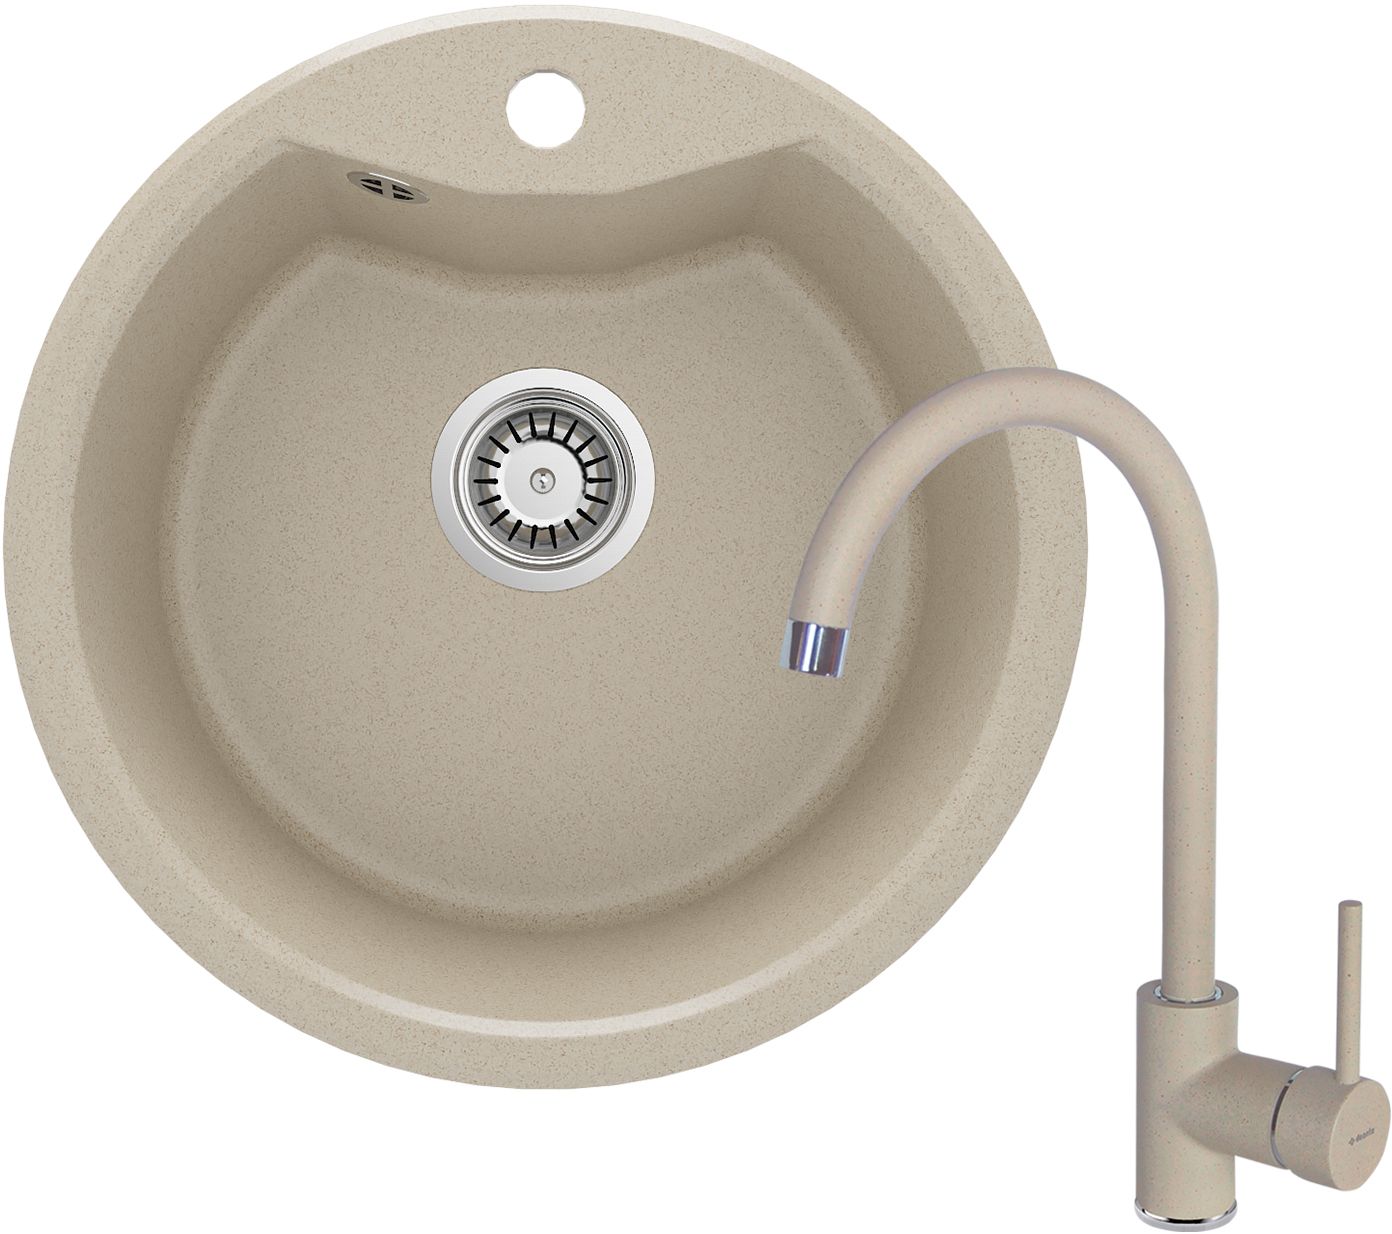 Évier en granit avec robinet, 1 bac - ZRSB7803 - Główne zdjęcie produktowe